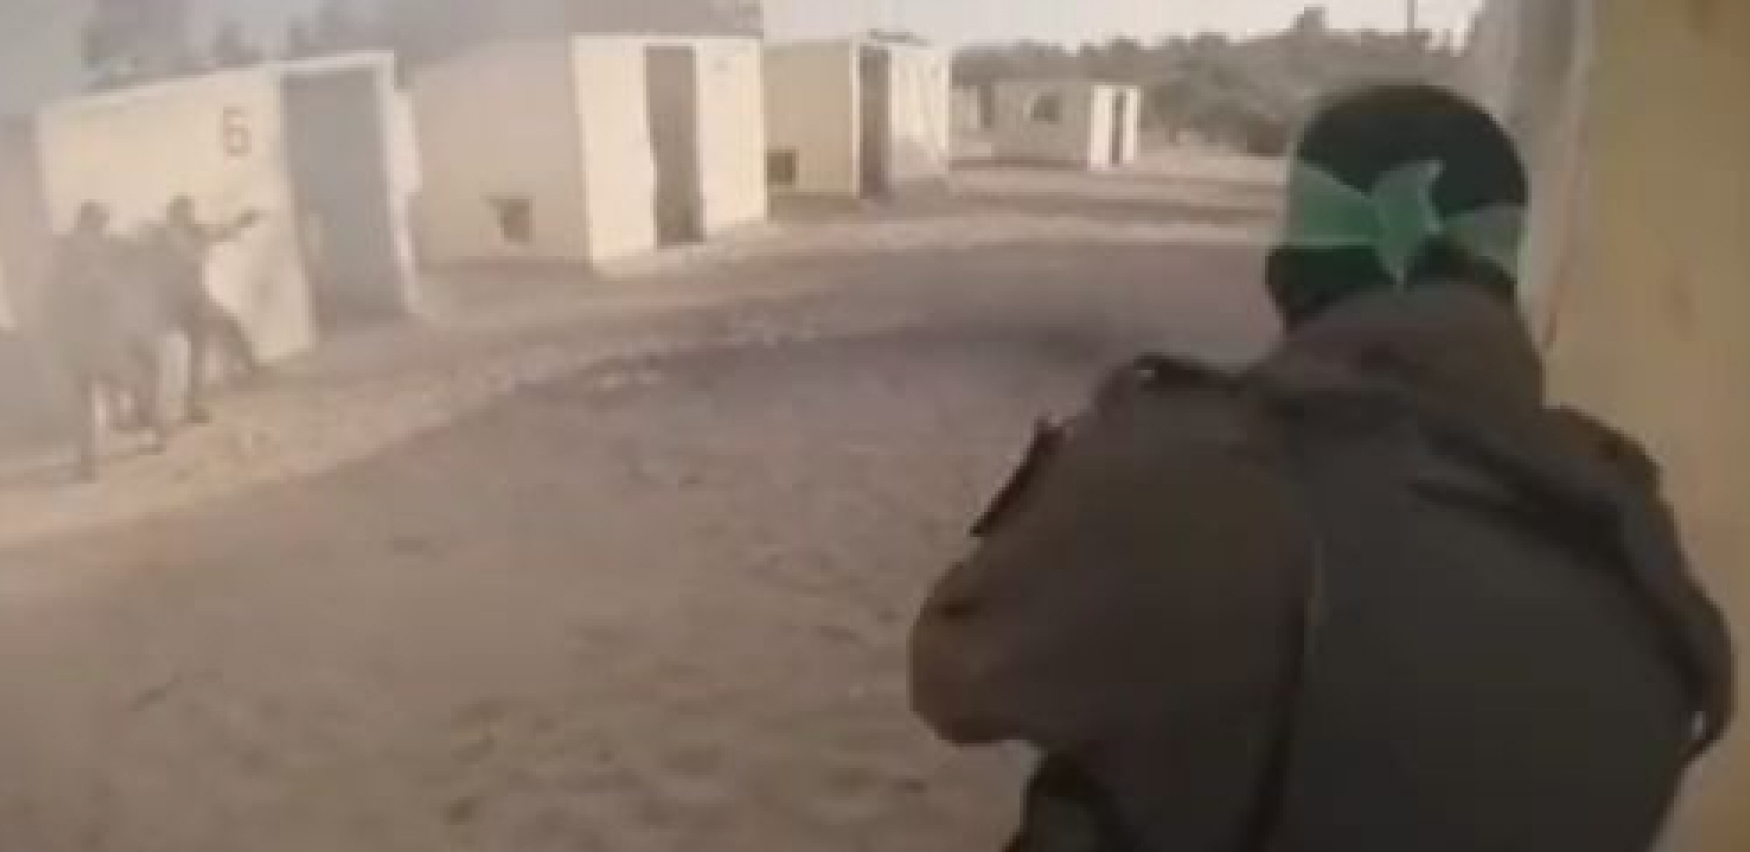 Hamas objavio snimak napada